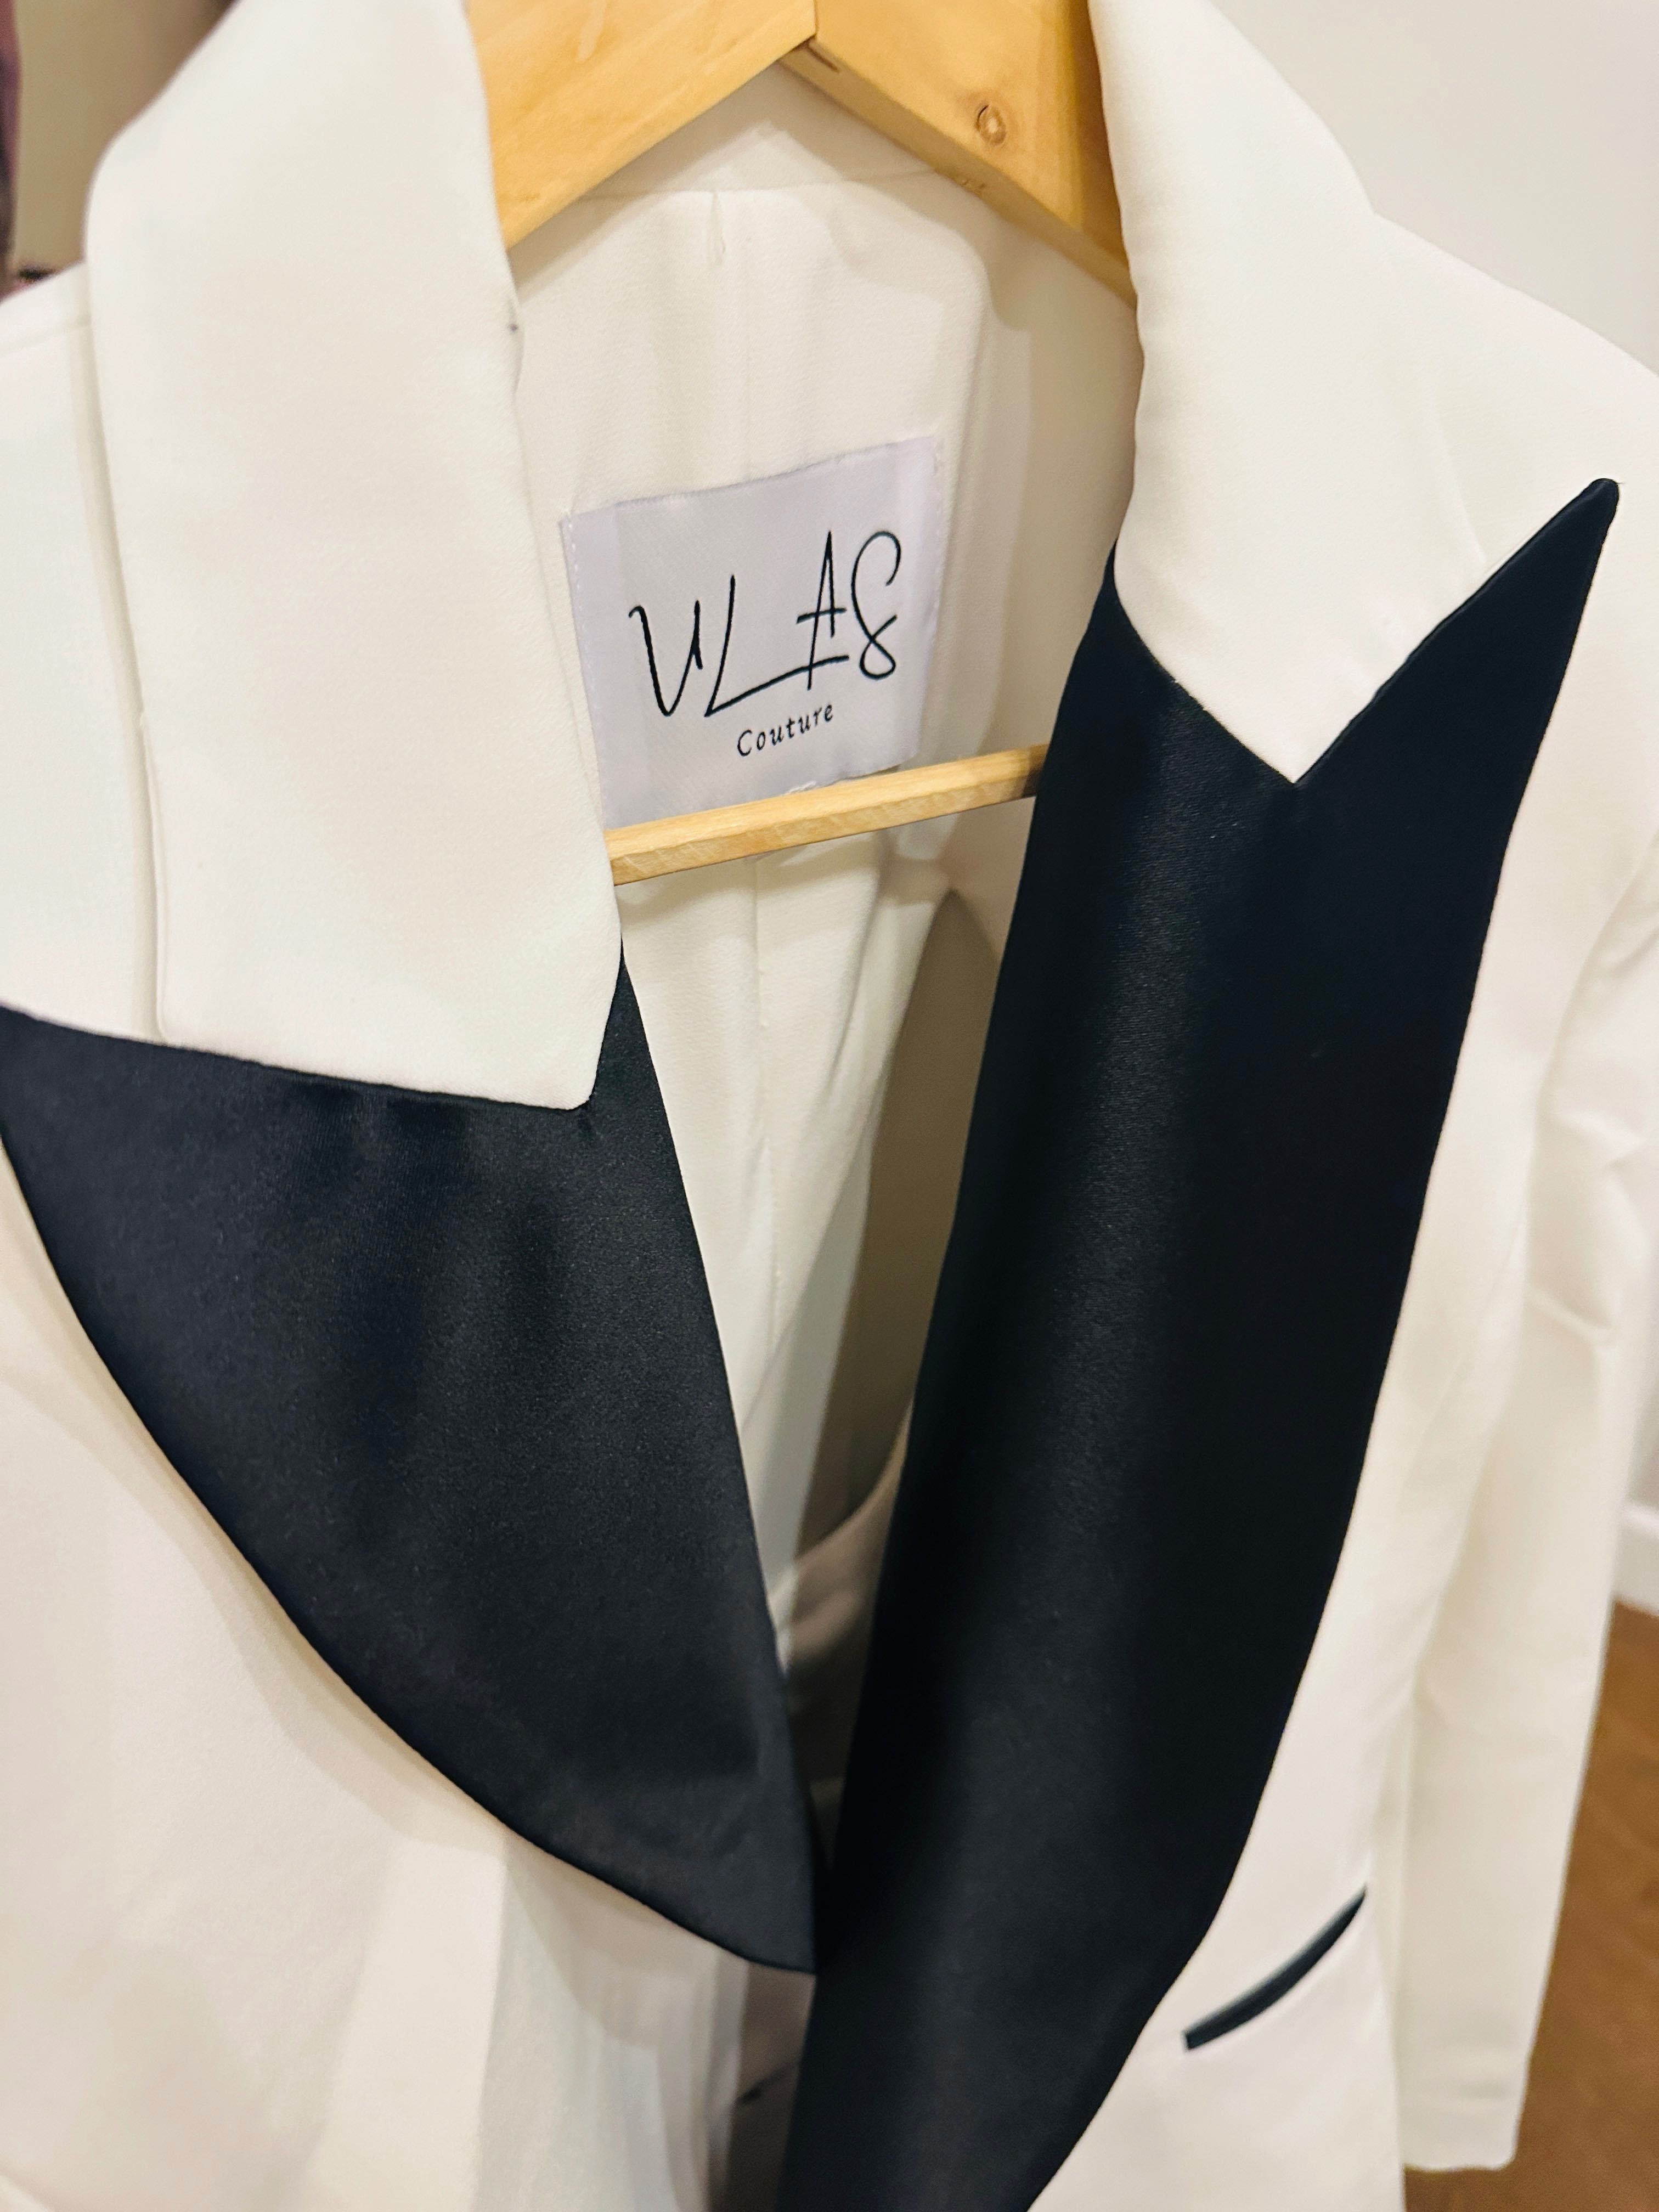 Vand costum super VLAS Couture